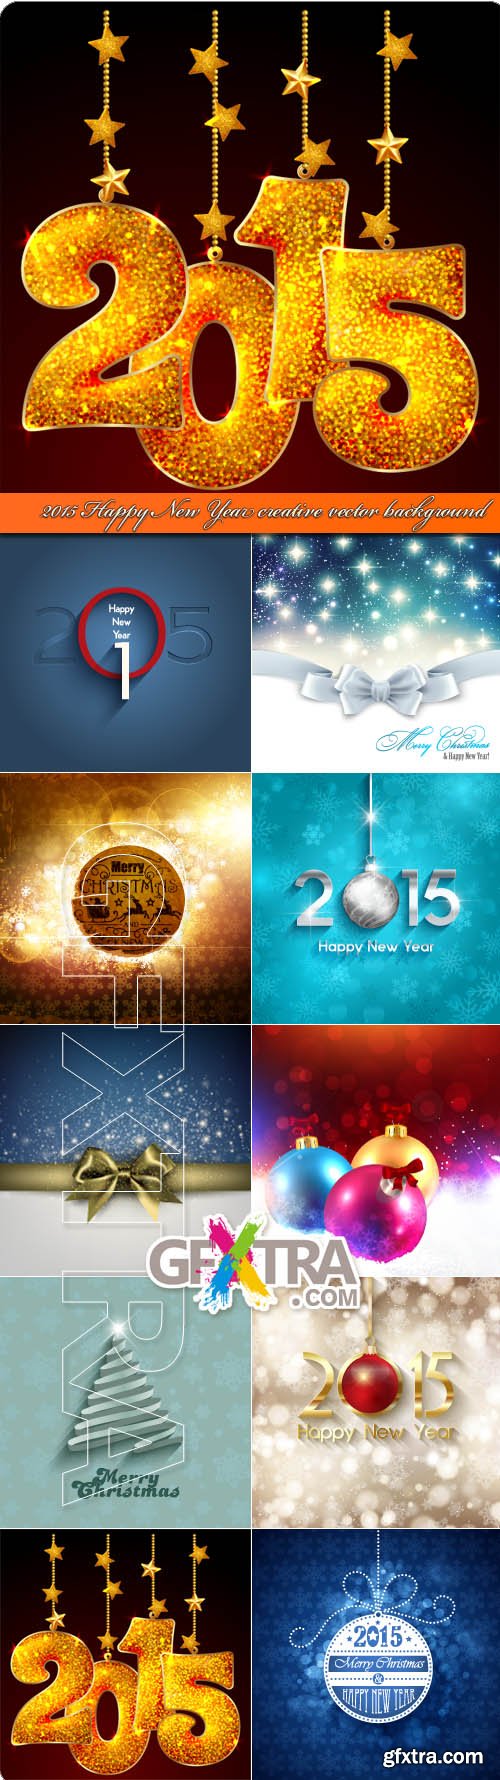 2015 Happy New Year creative vector background